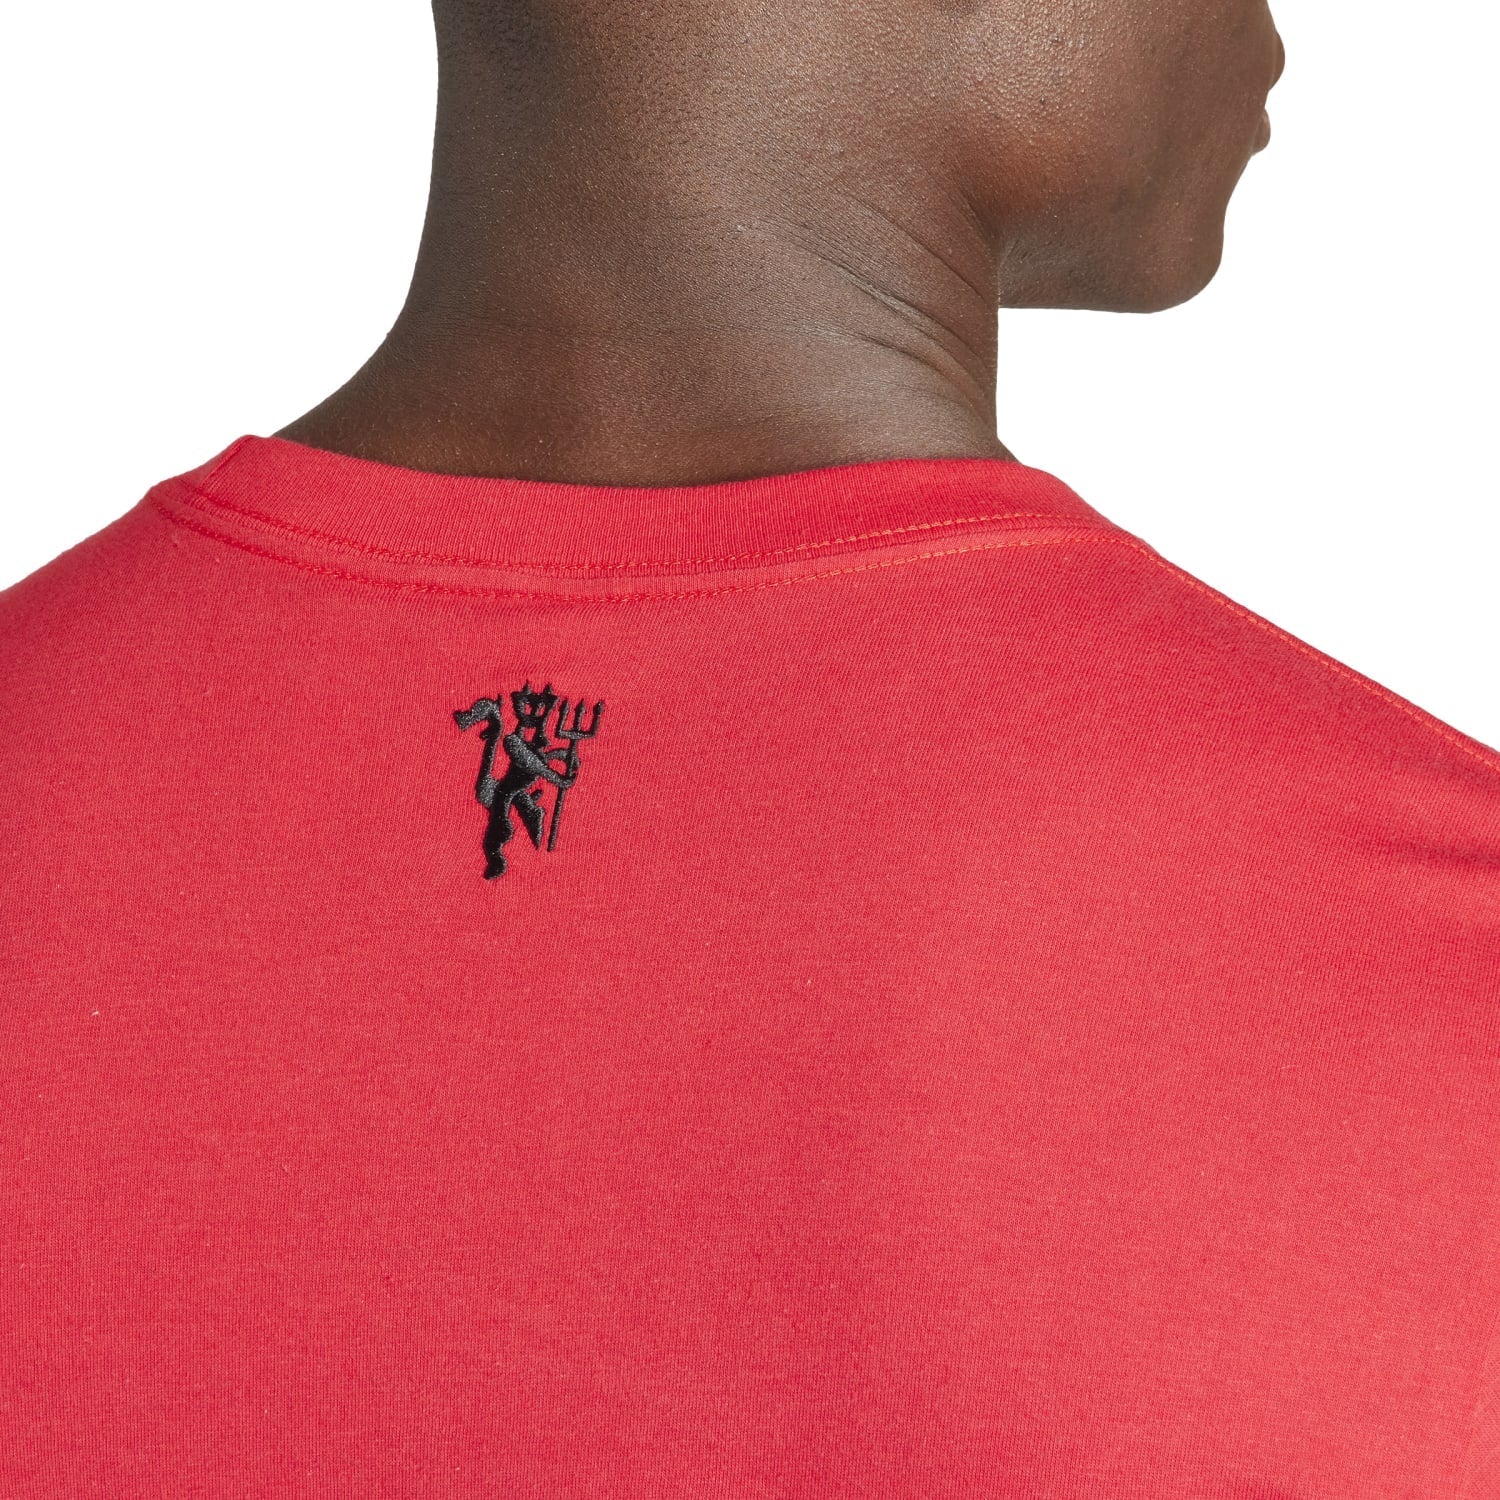 Adidas Men Manchester United Essentials T-Shirt Wockeeper Red IK8705 - T-SHIRTS - Canada